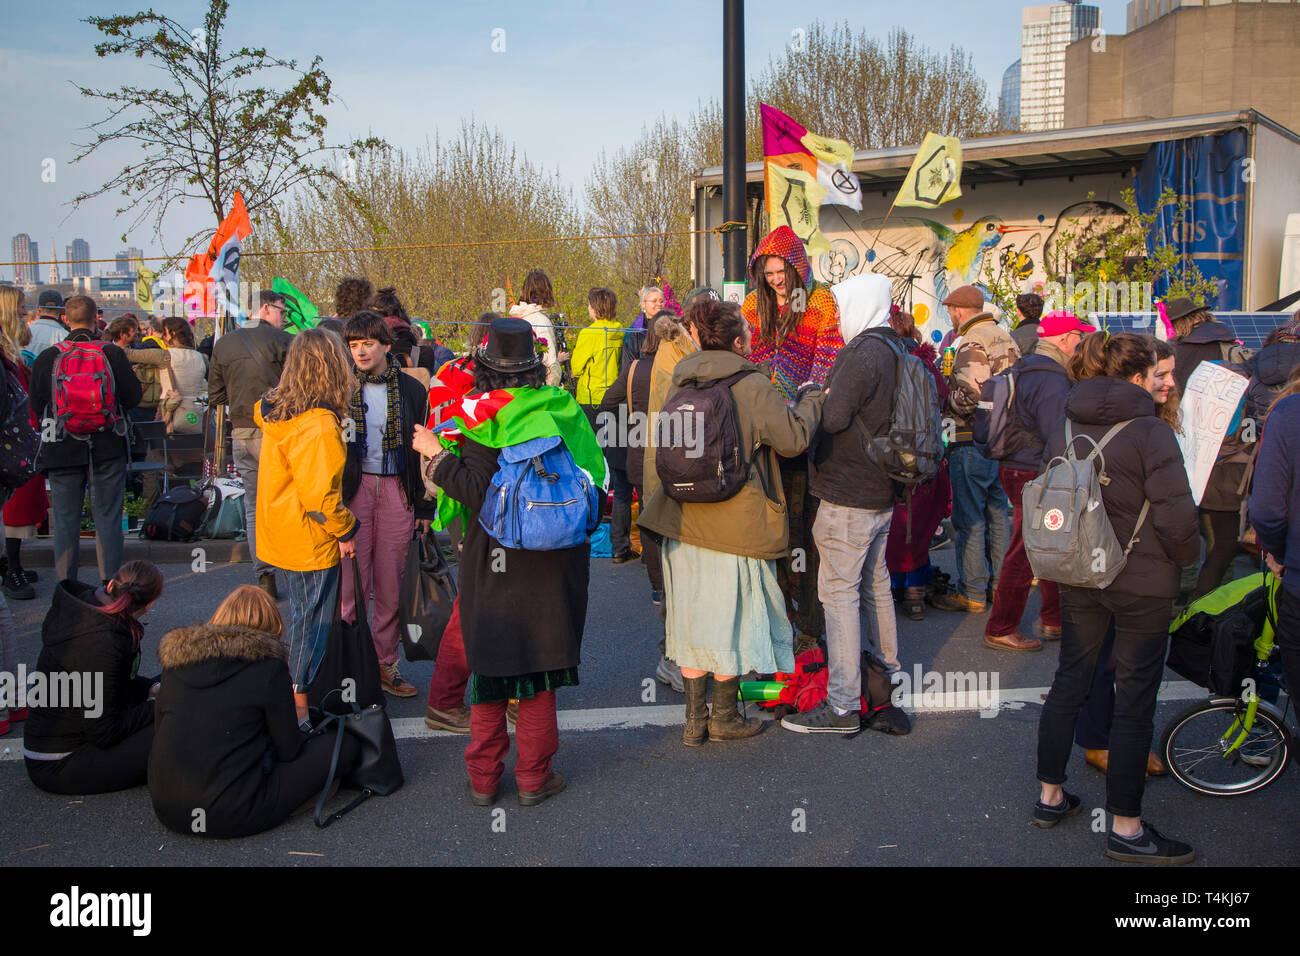 Protestors gather on Waterloo Bridge for the Extinction Rebellion demonstration Stock Photo